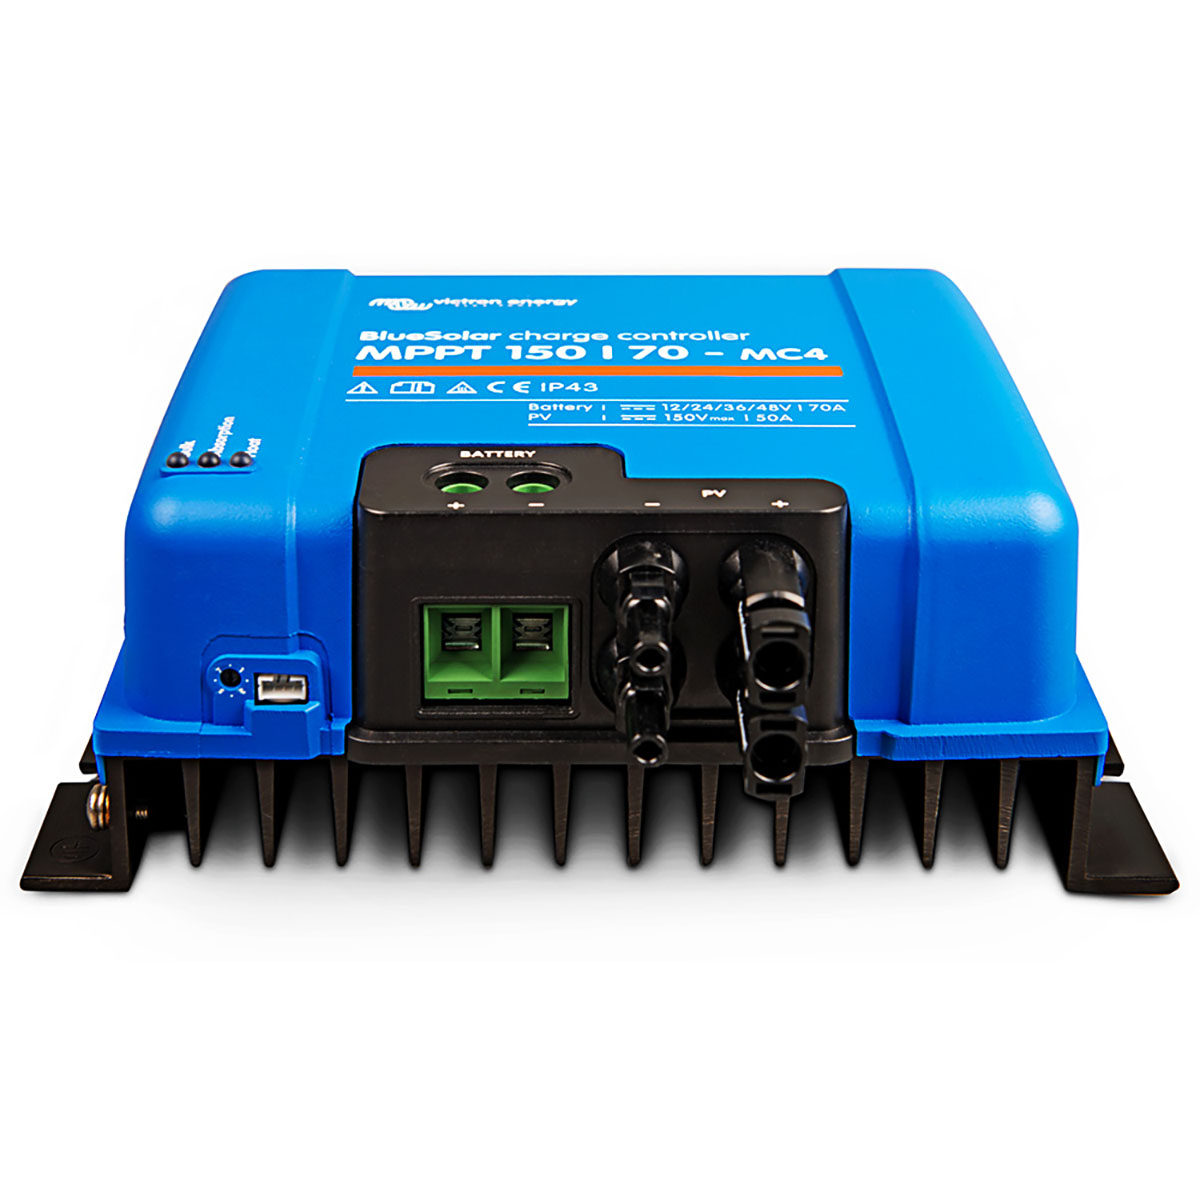 Alle Batterien, Blau VICTRON 12V MPP-Tracker 48V MPPT BlueSolar ENERGY 150/70-MC4 24V 70A